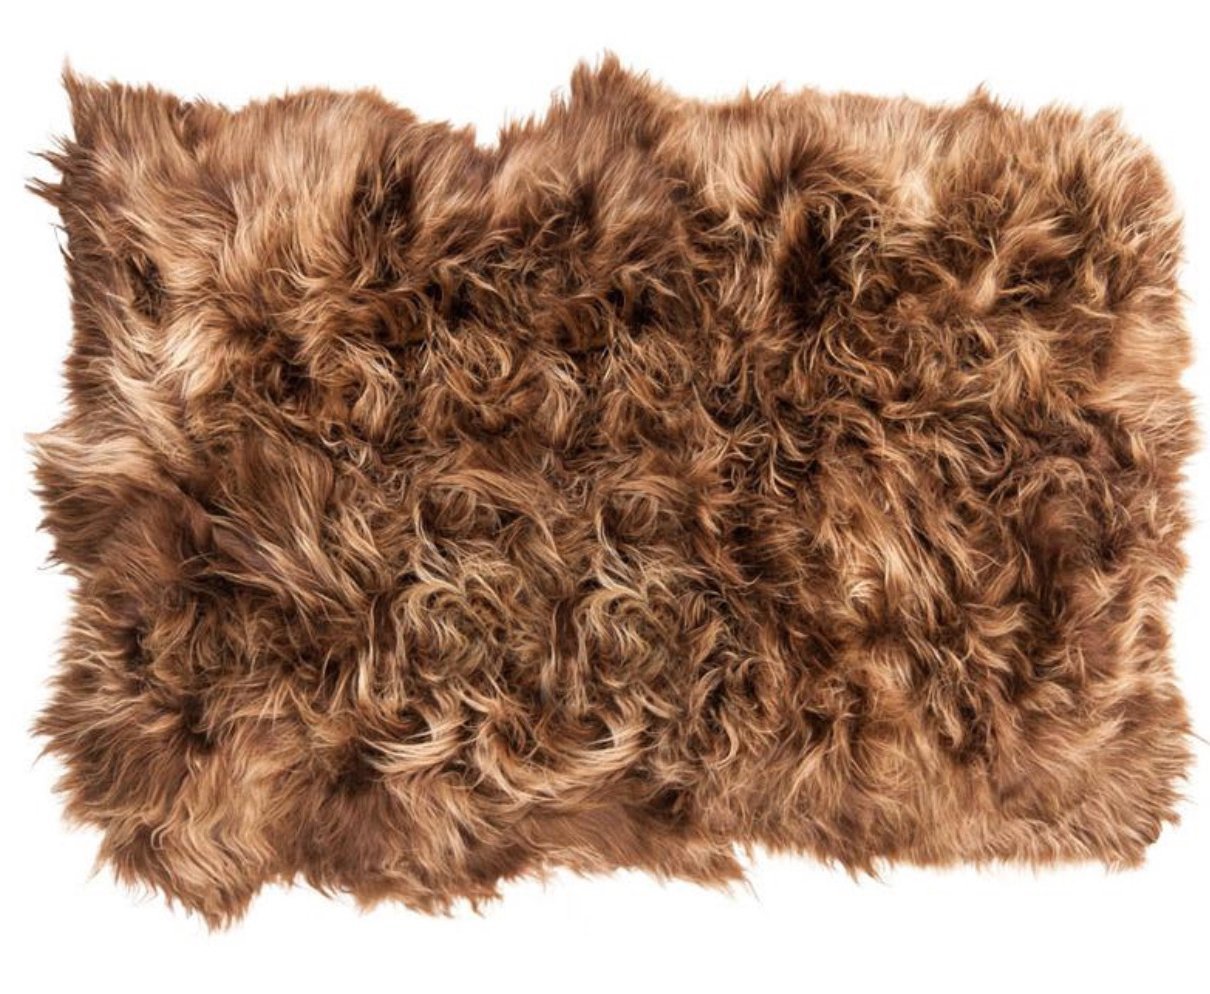 Icelandic Sheepskin Long Fur Rug Russet Rich Brown 100% Sheep Skin Throw ALL SIZES available Double, Triple, Quad, Penta, Sexto, Octo - Wildash London